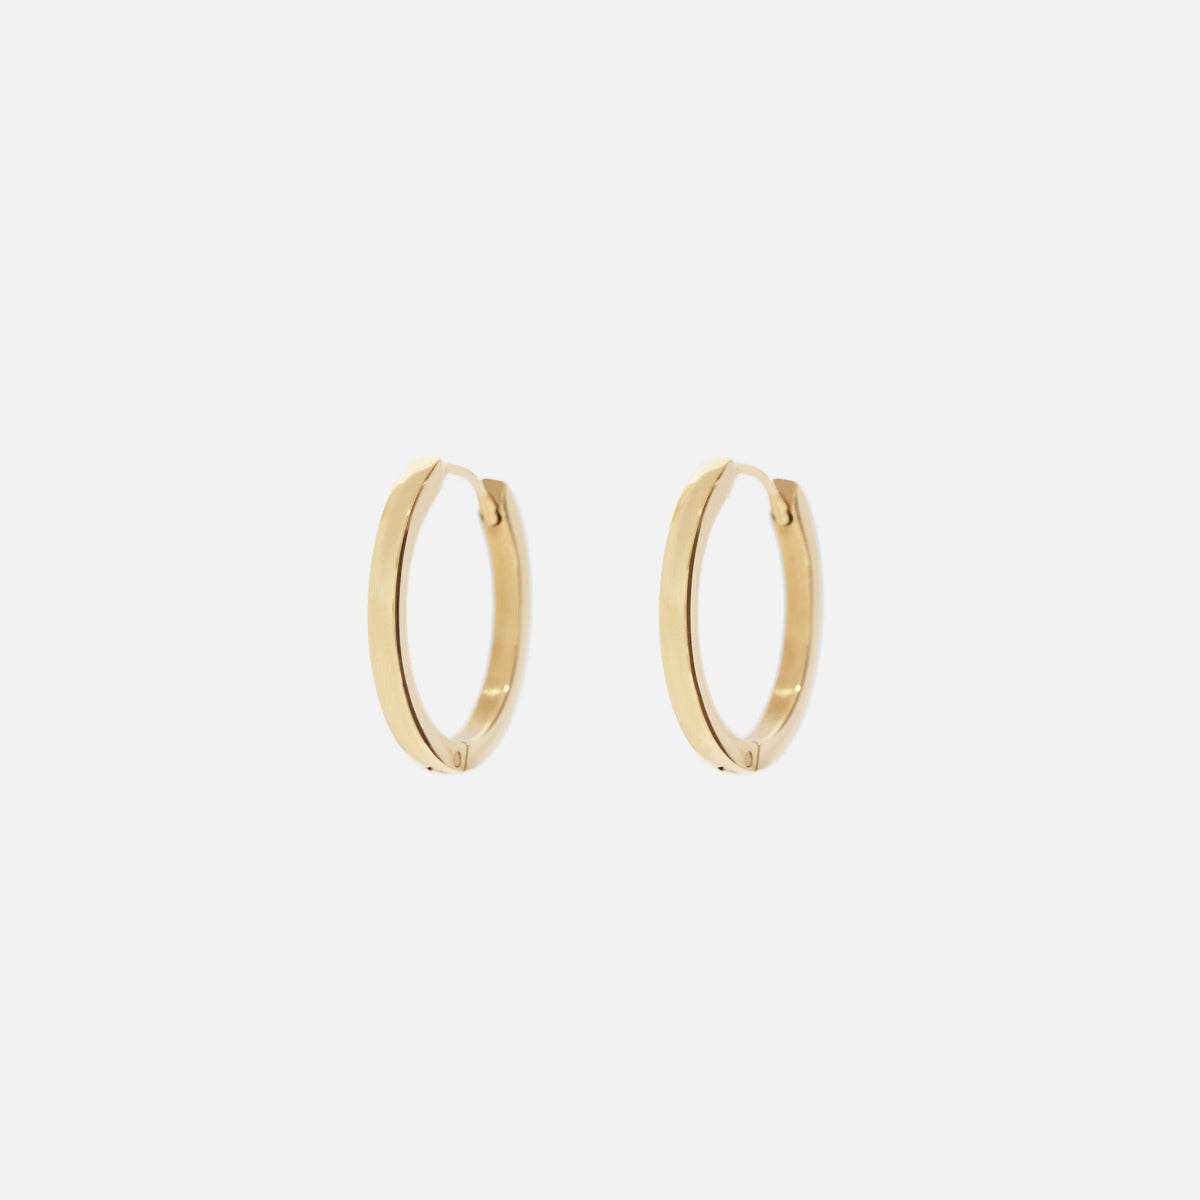 Small stainless steel golden hoops earrings